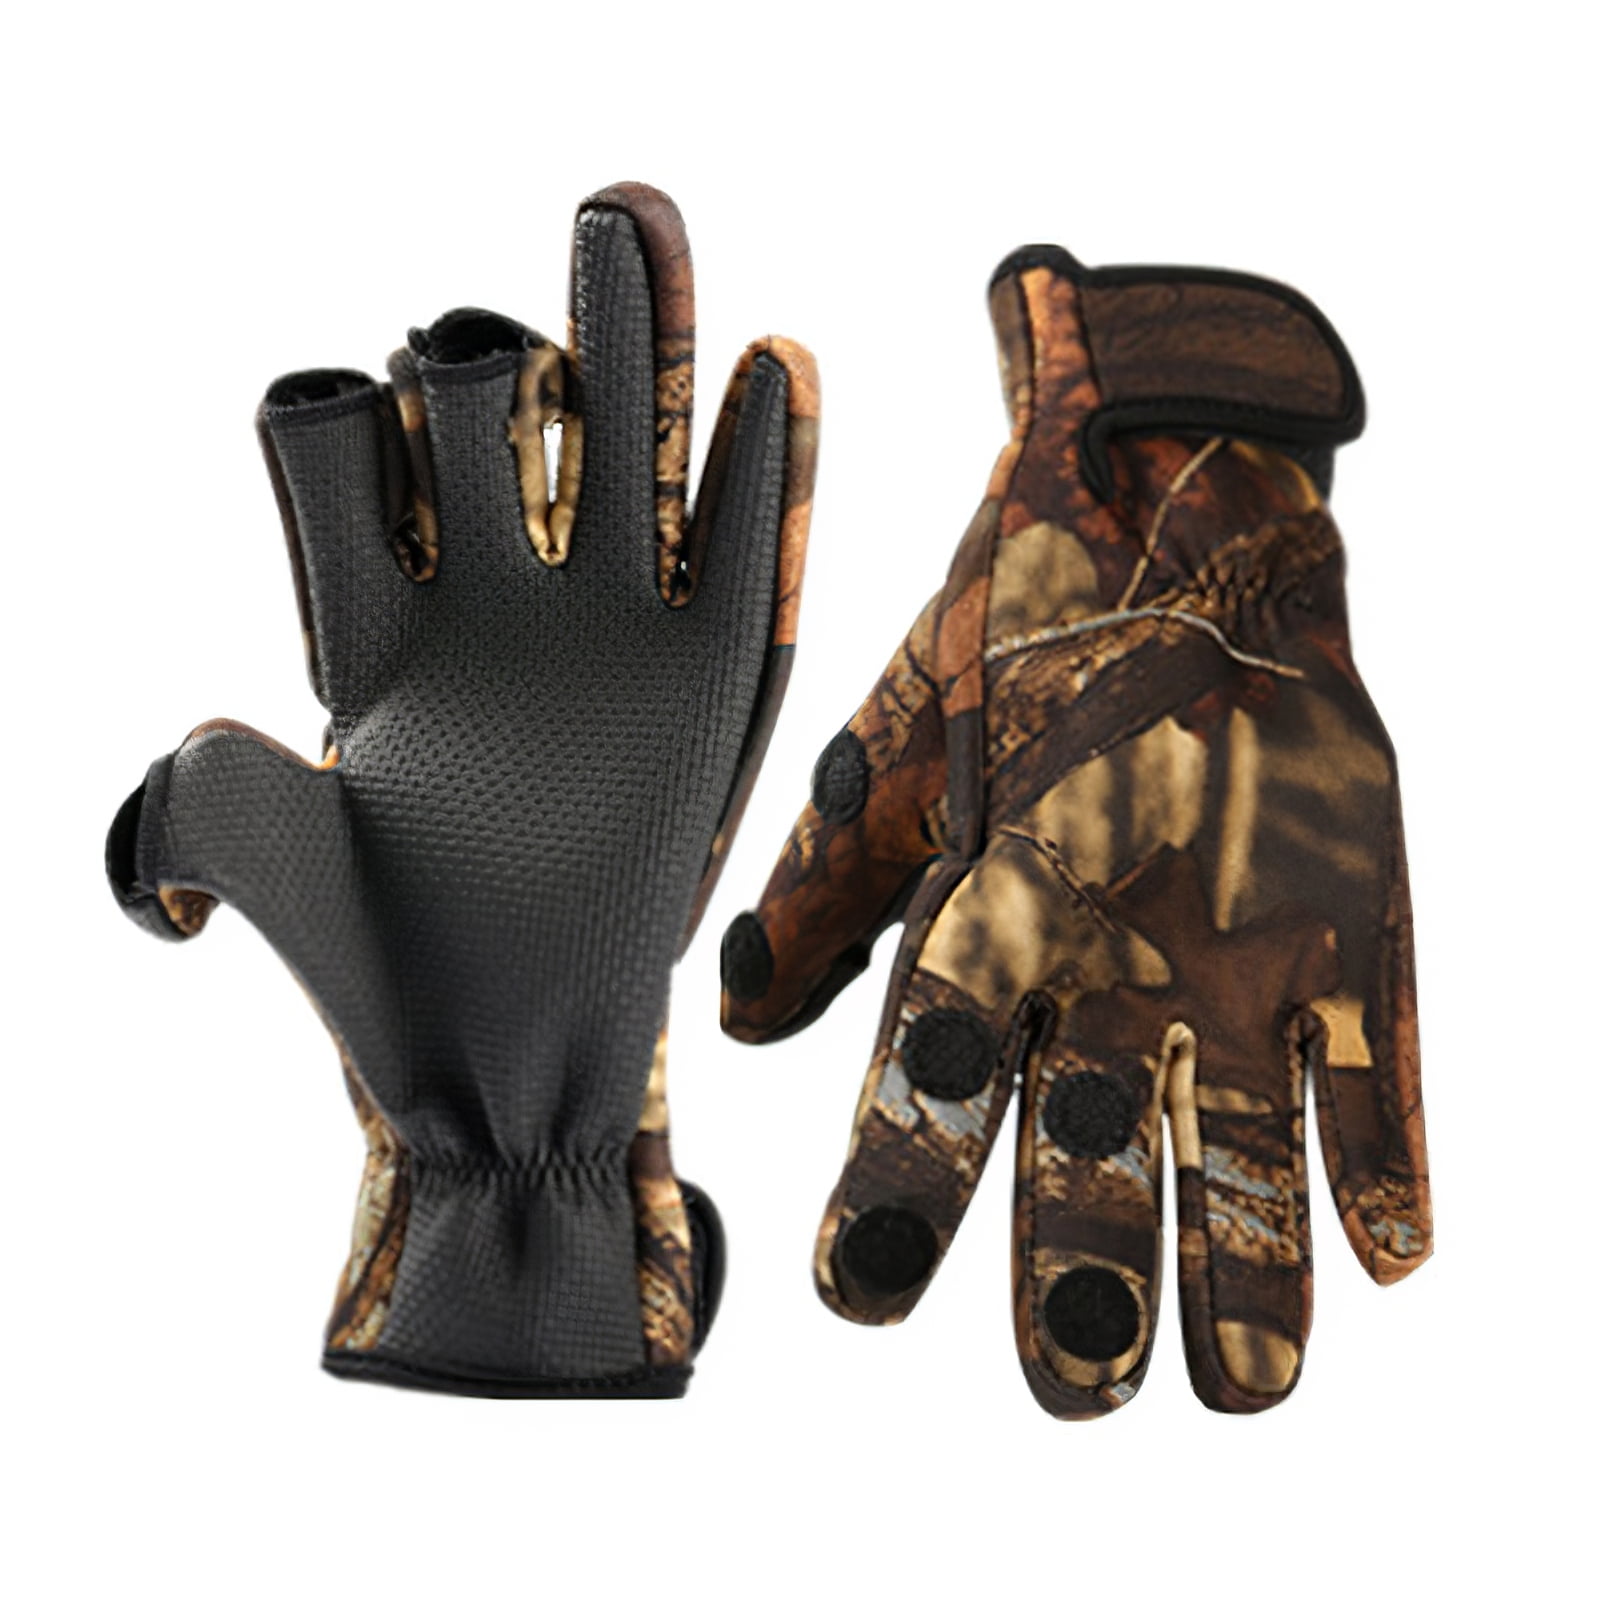 Neoprene Ice Fishing Gloves Warm Anti-slip 2-Cut Fingers Outdoor Black 3 Size 